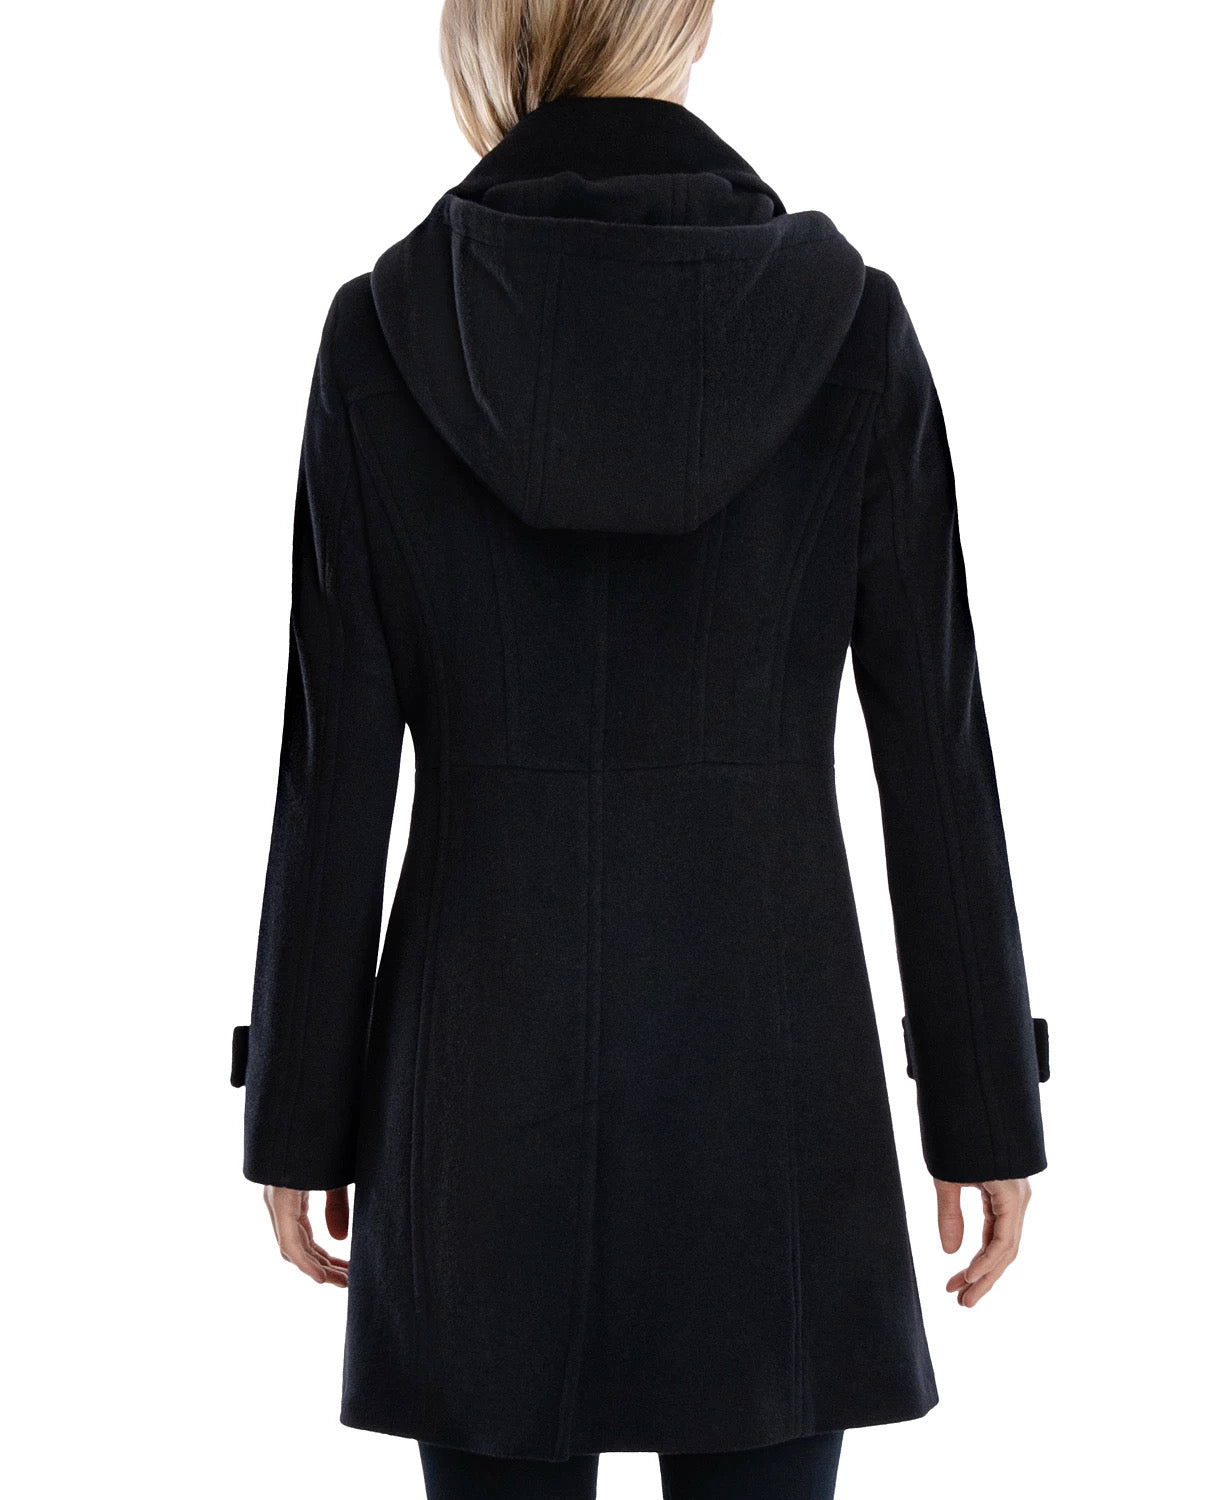 MICHAEL Kors Women's Zip Hooded Coat Black Petite XS Black PXS